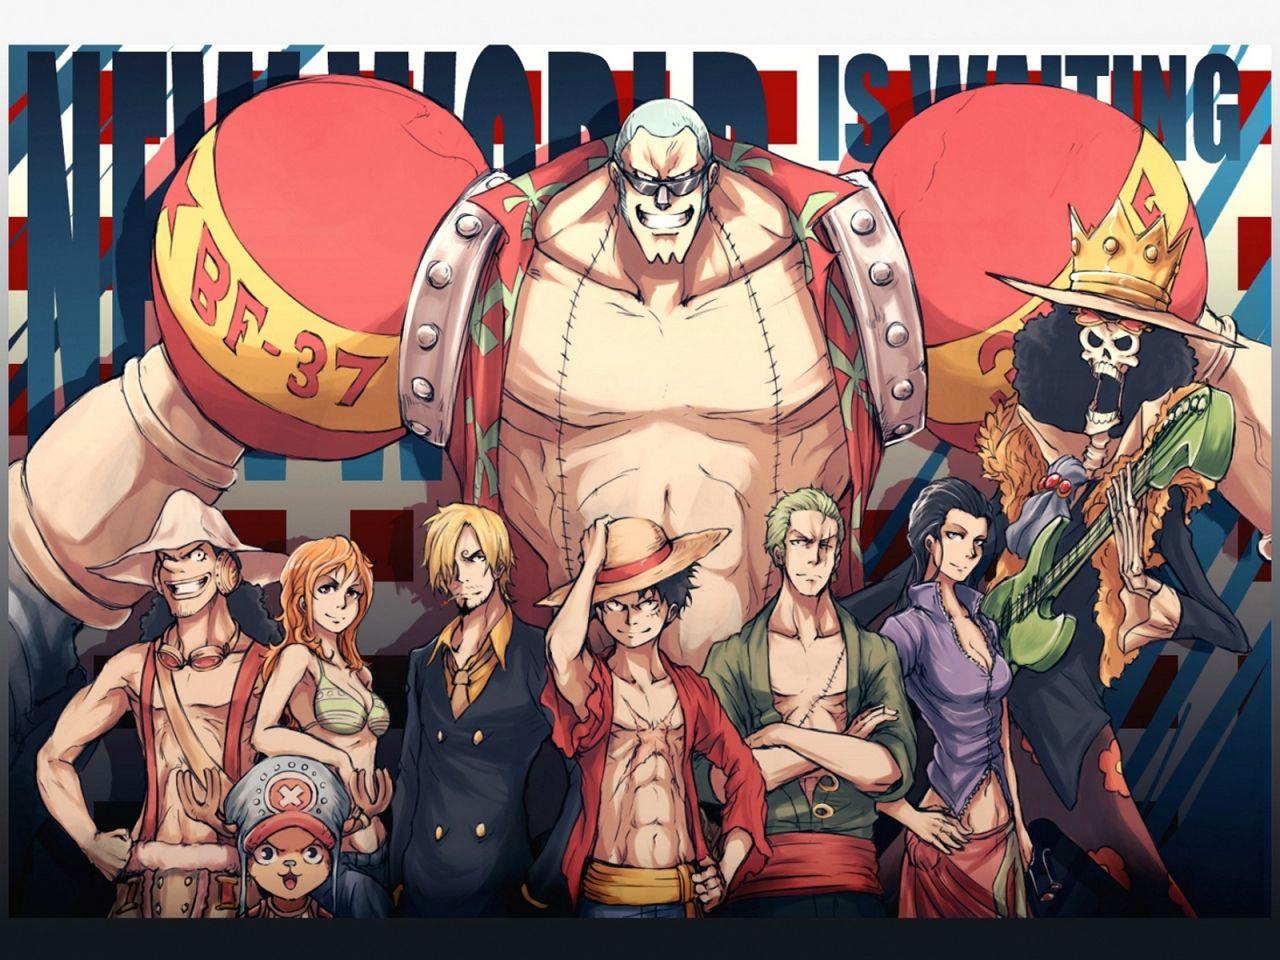 Monkey D Luffy Wallpaper, One Piece Crew Monkey D Luffy